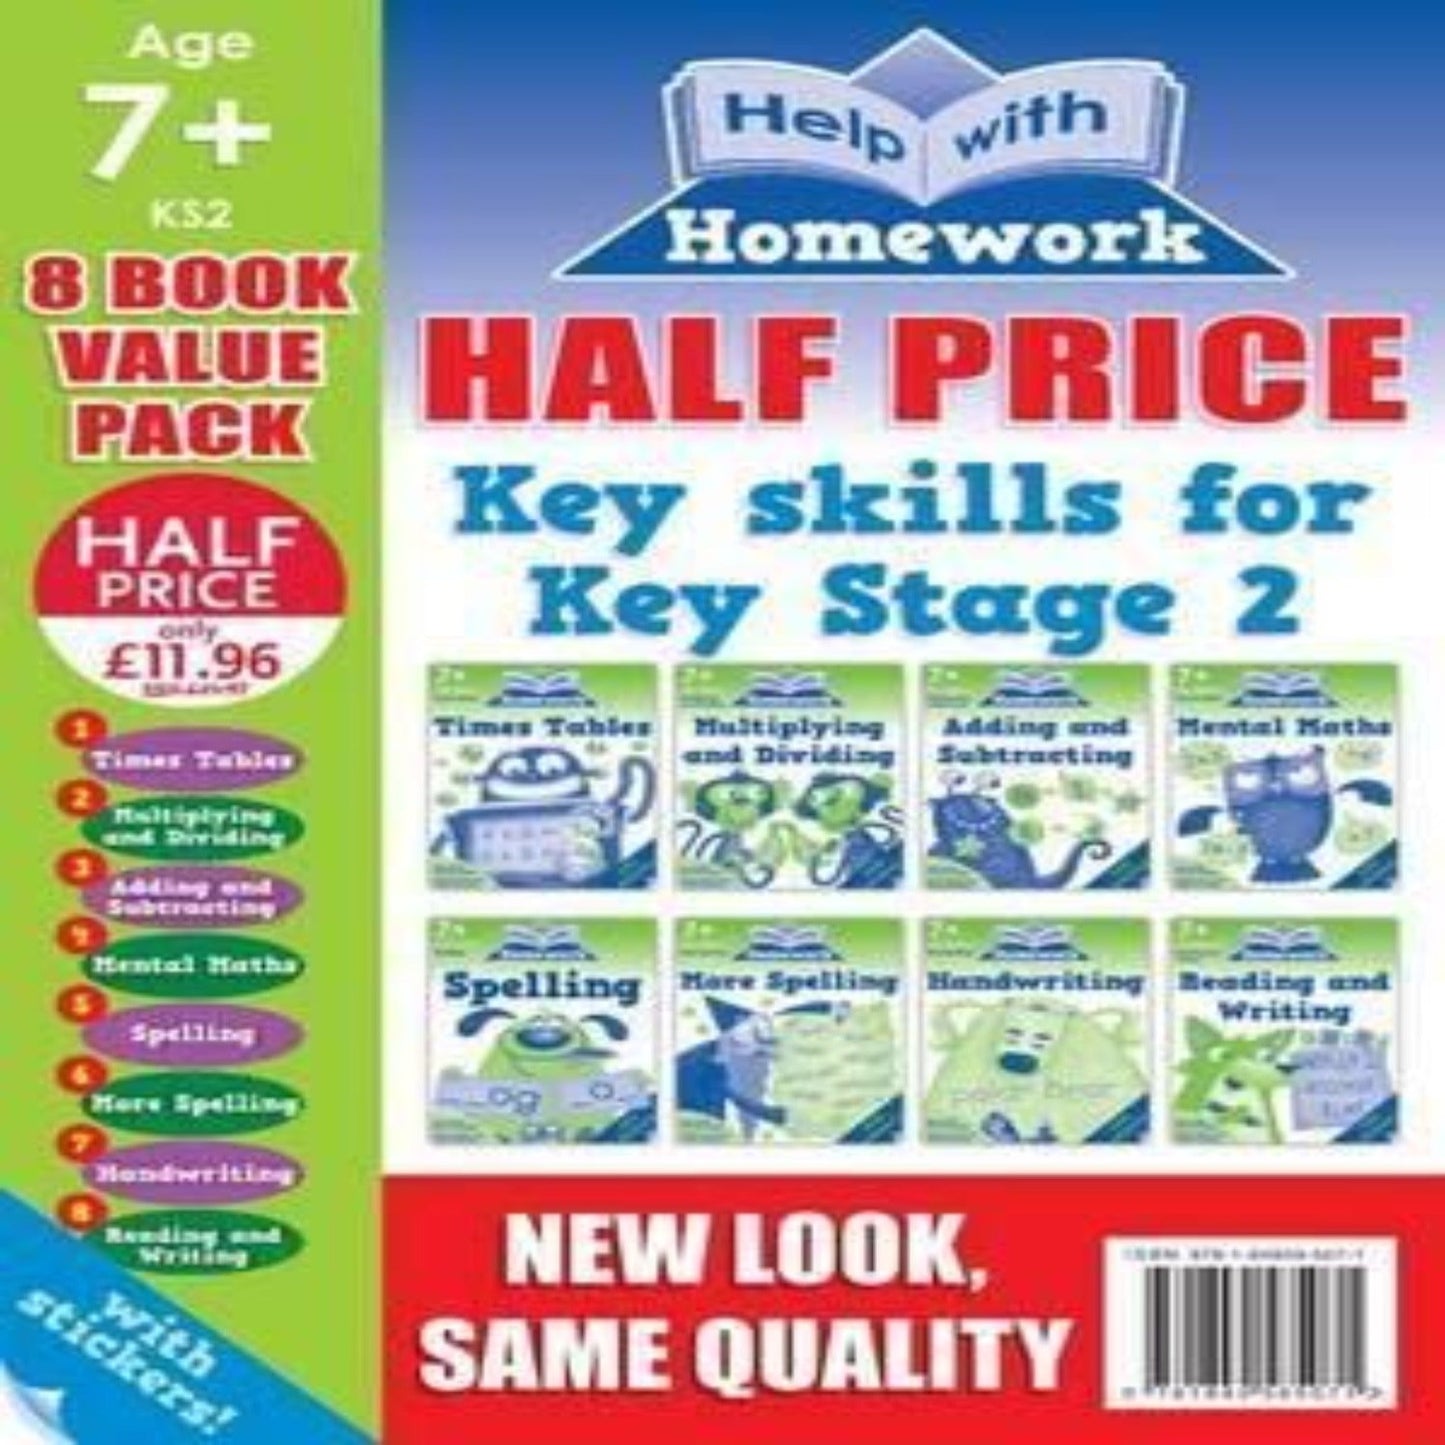 Help with Homework Half Price Key Skills for Key Stage 2, 7+ Years